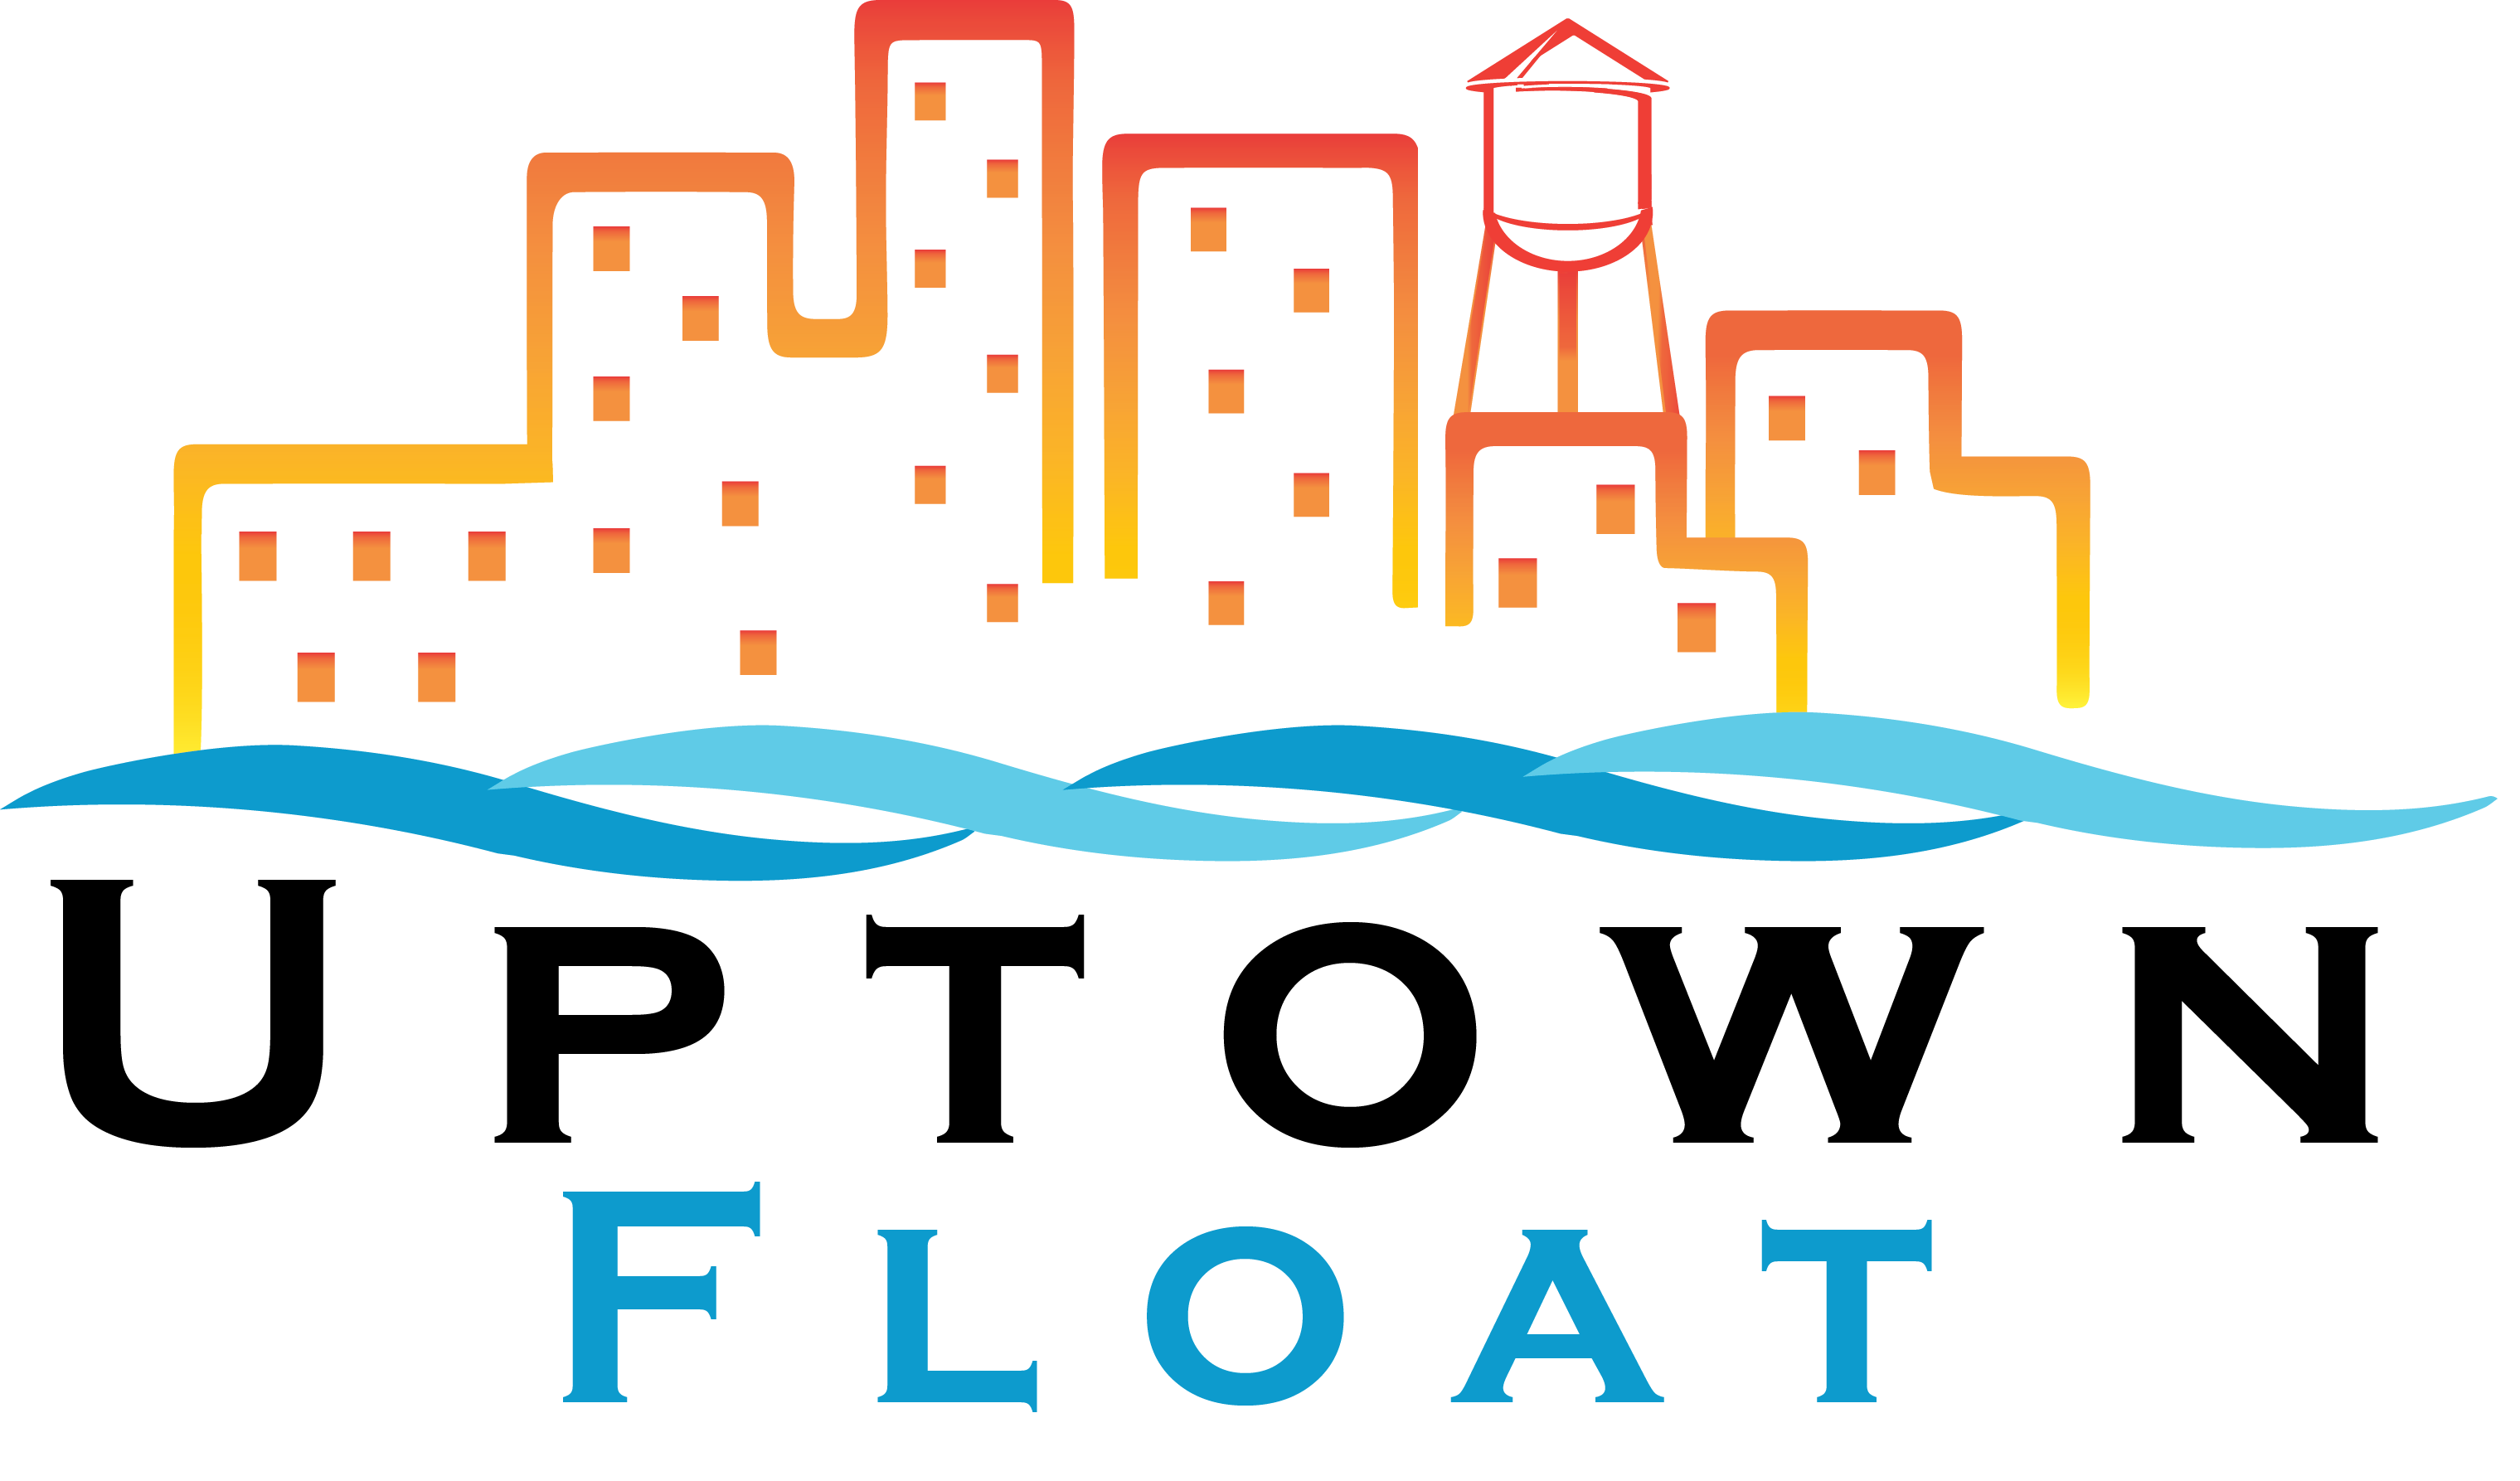 Uptown Float